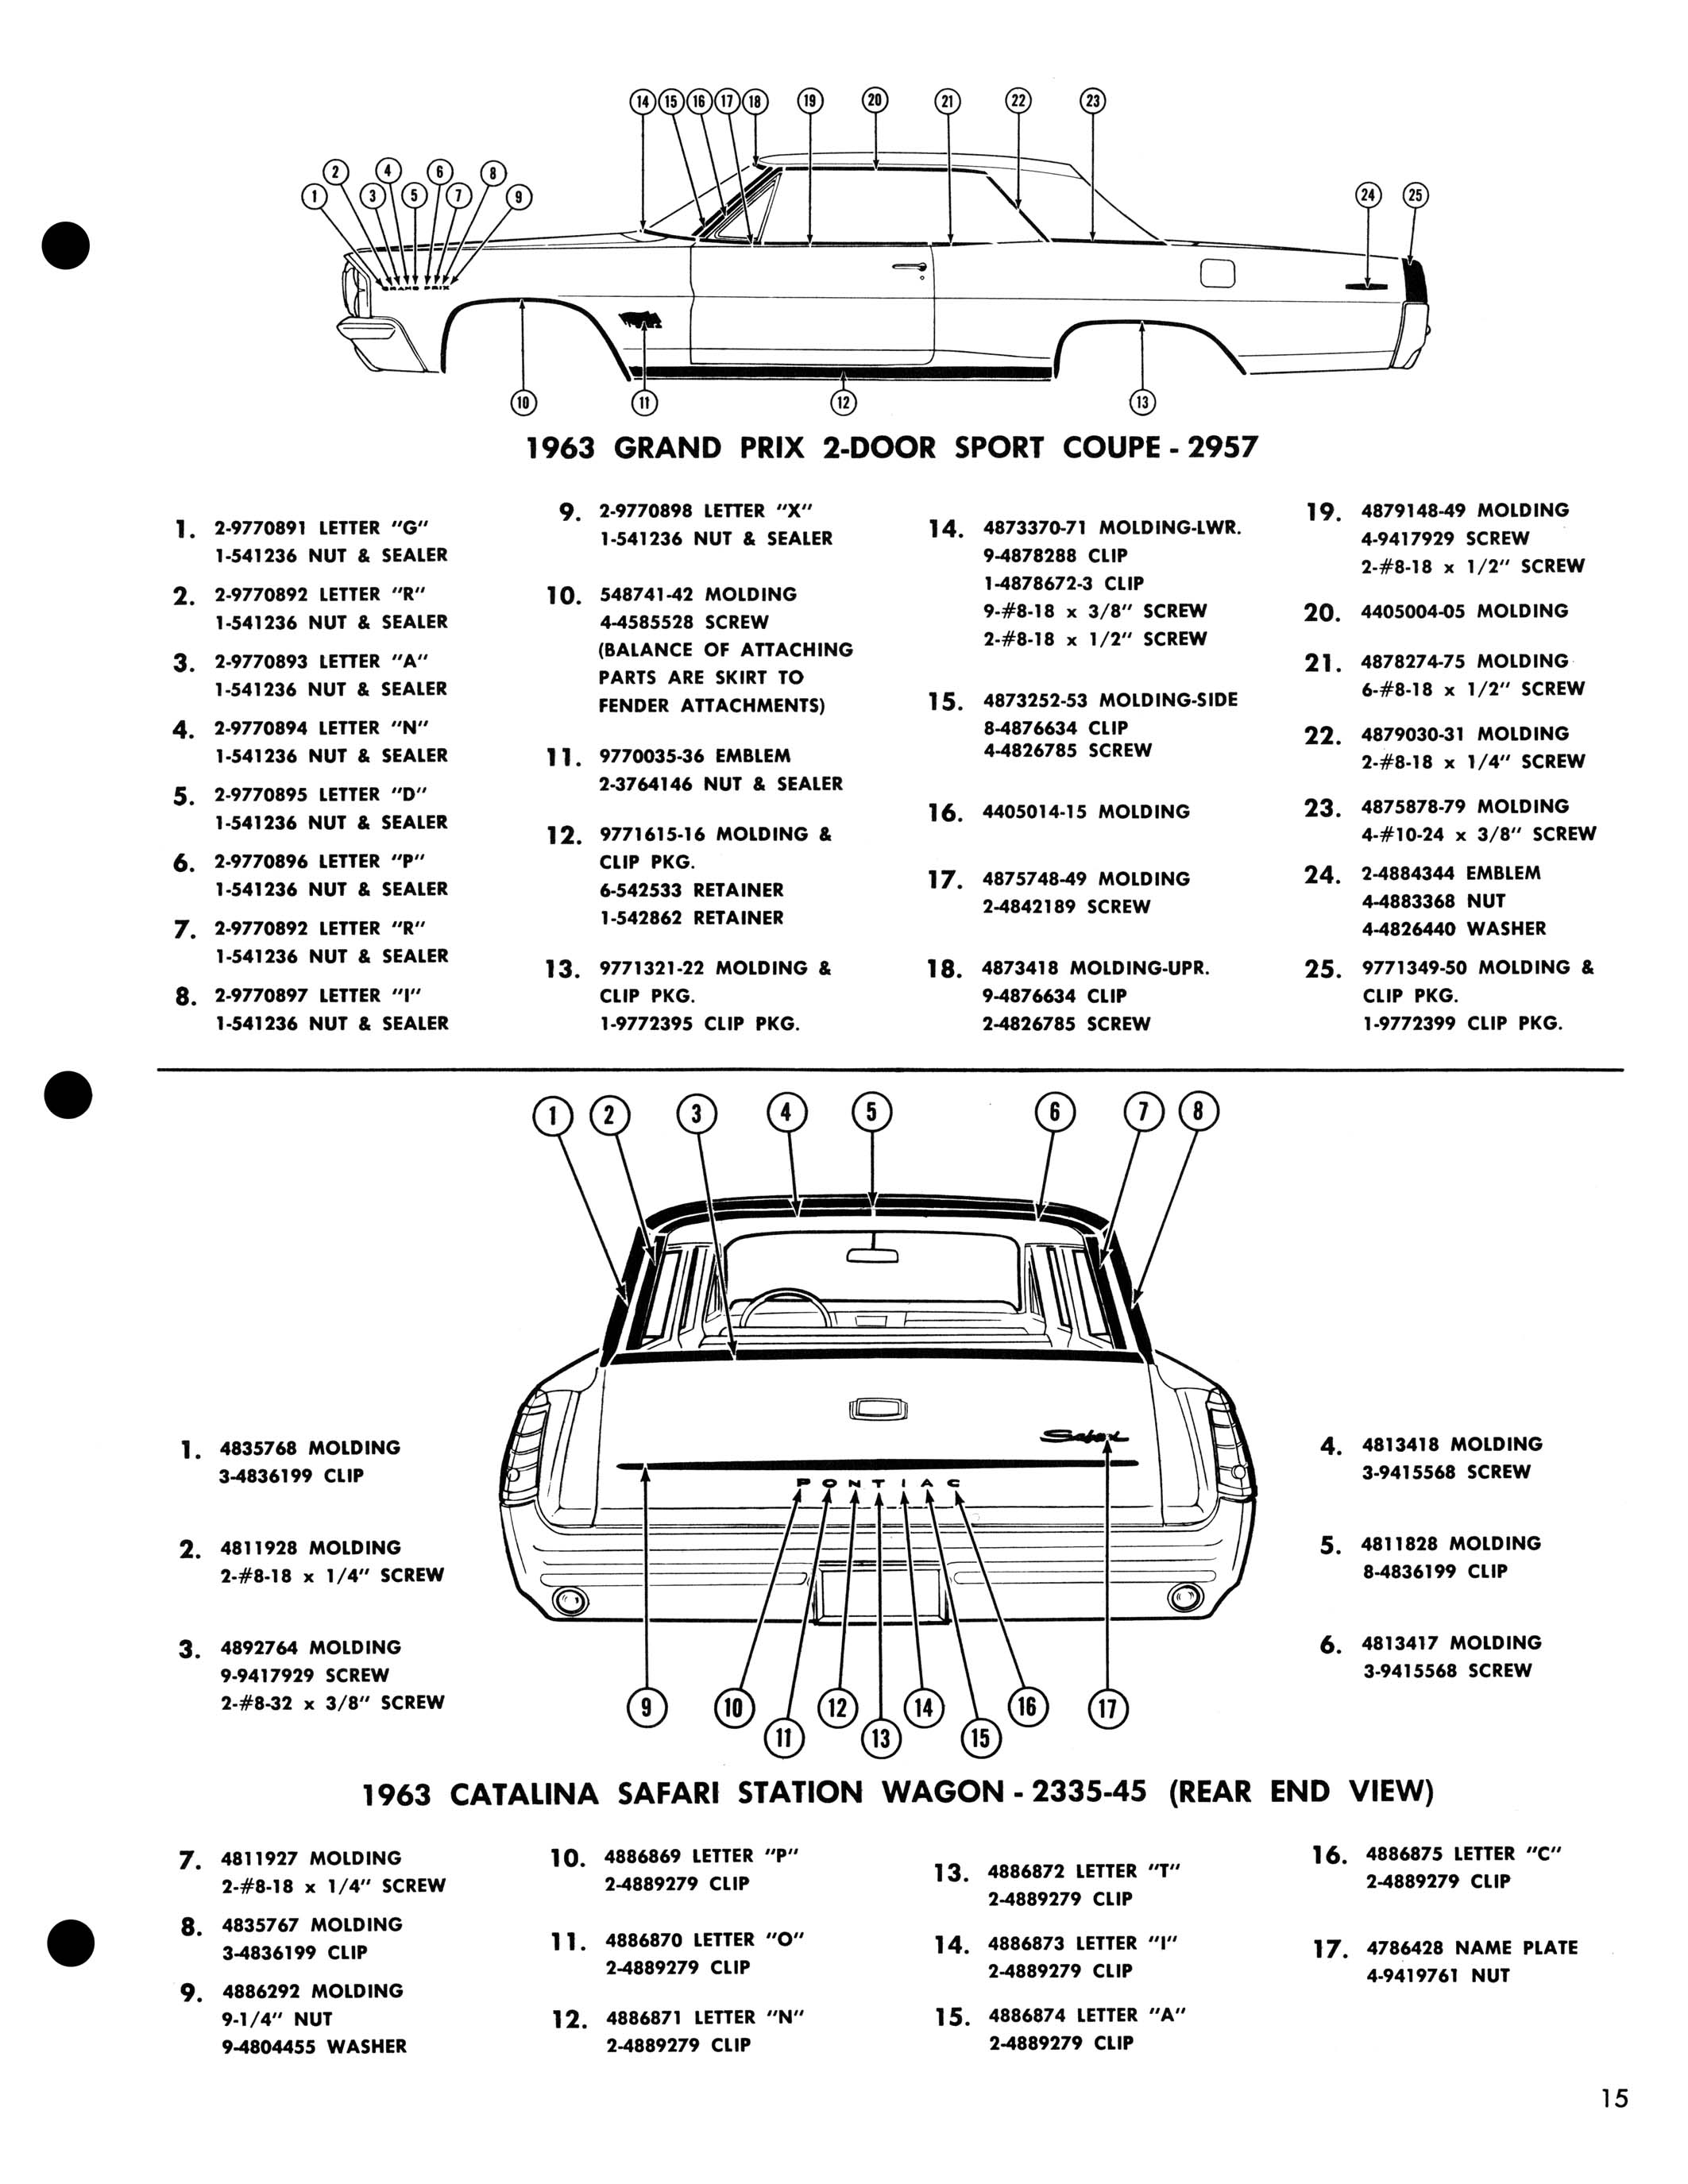 1963_Pontiac_Moldings_and_Clips-17